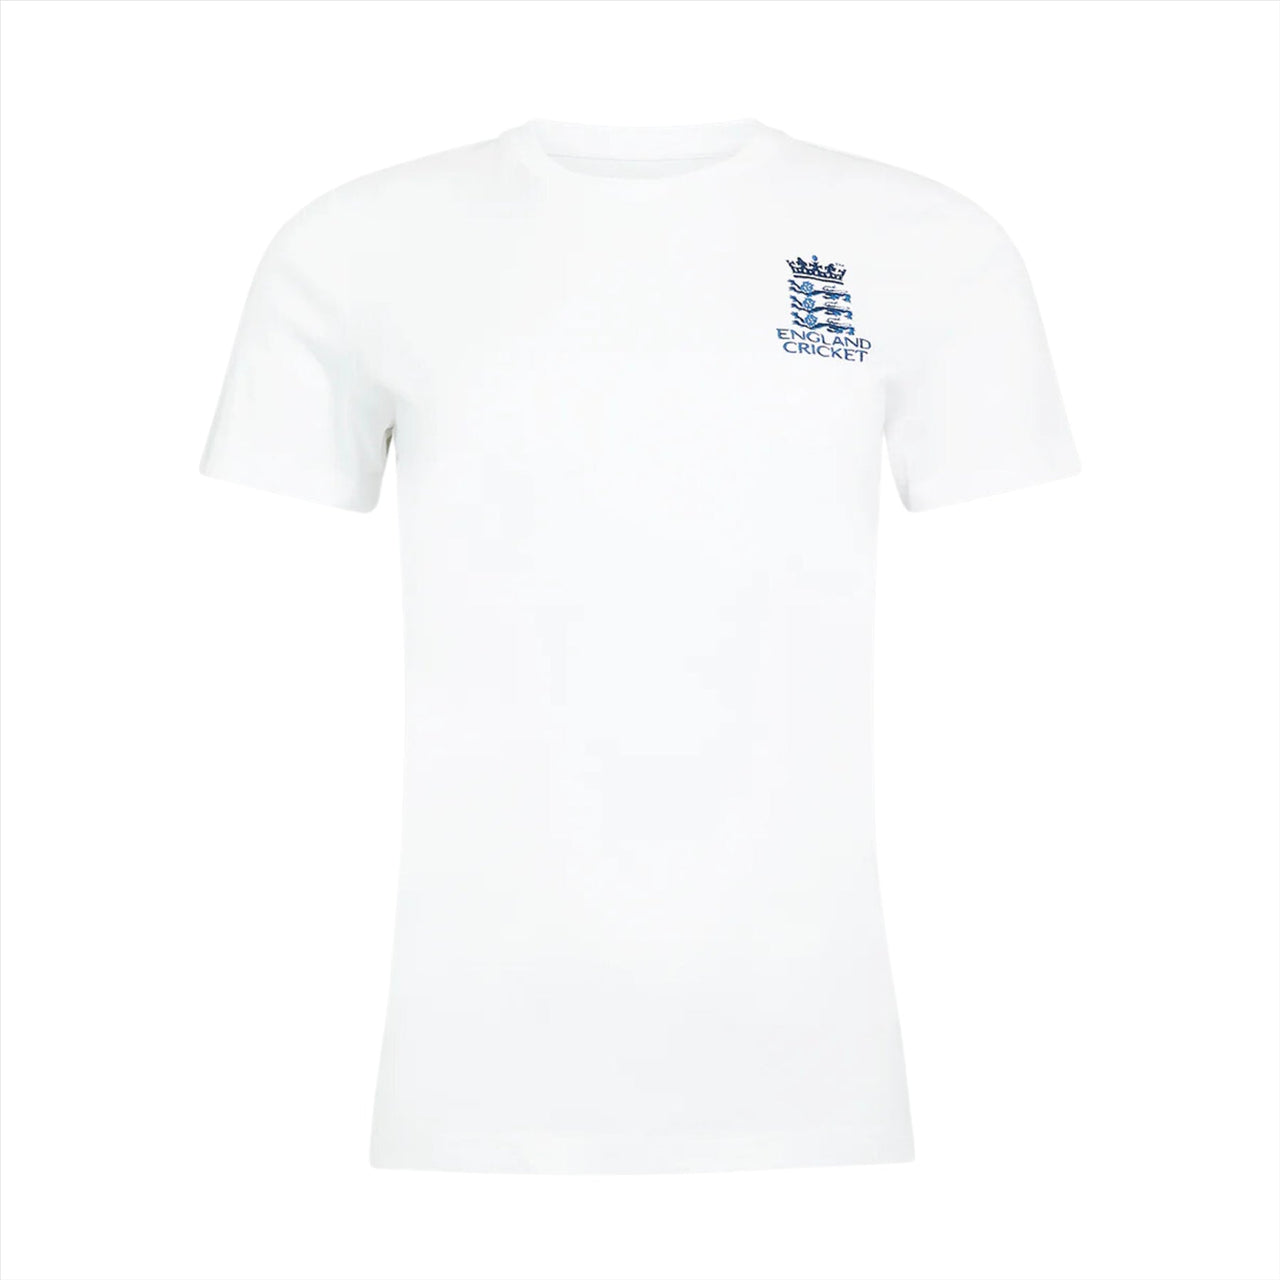 England Cricket Women's Contemporary Core T-Shirt | Brilliant White